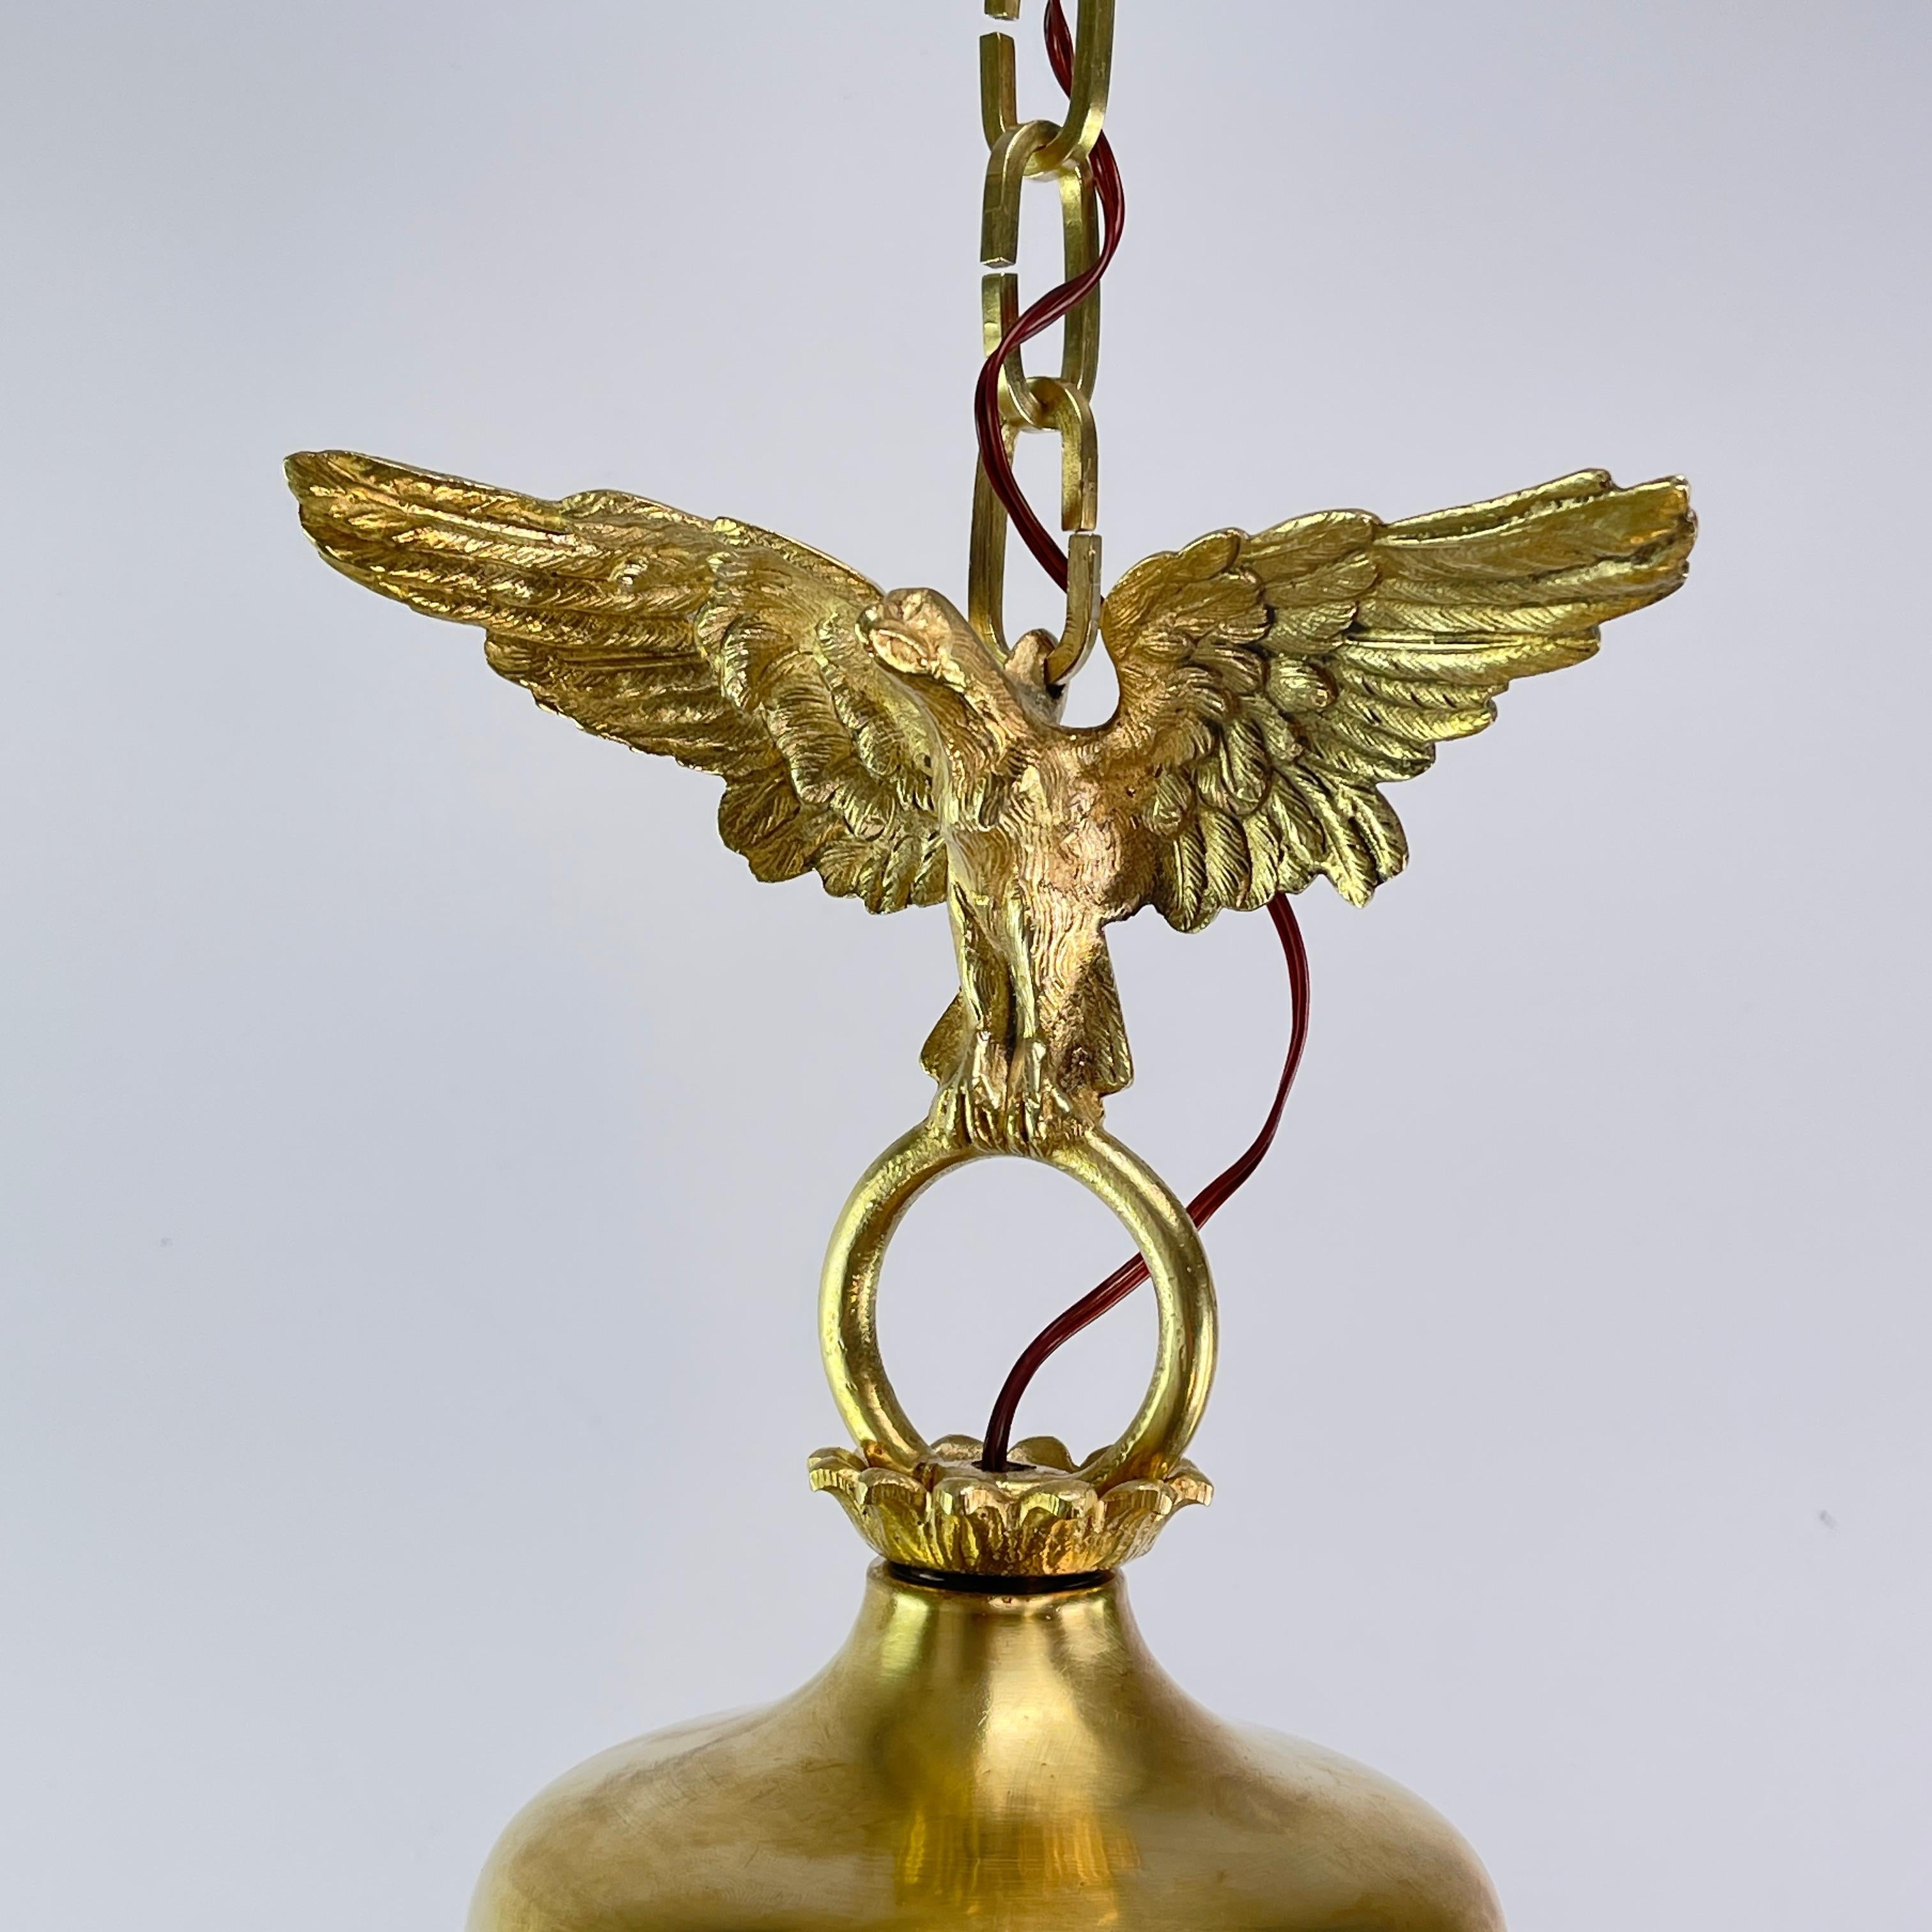 20th Century Art Nouveau Hanging Lamp Bronze with eagle, Teardrop Shape, 1900s For Sale